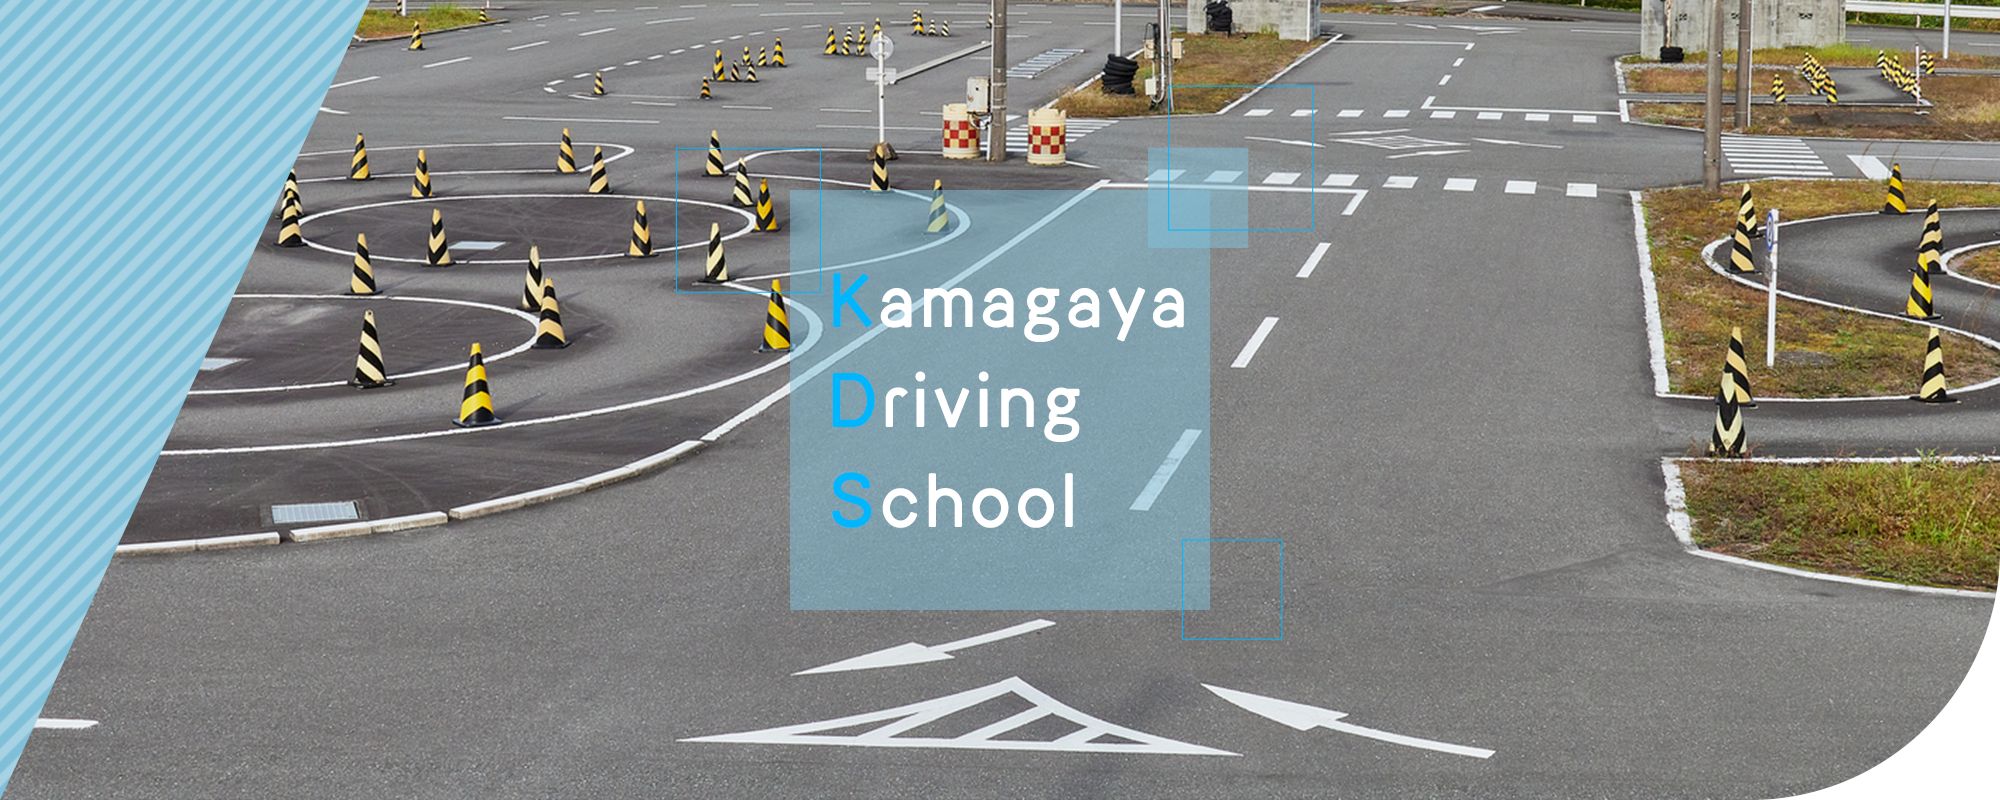 Kamagaya　Driving　School